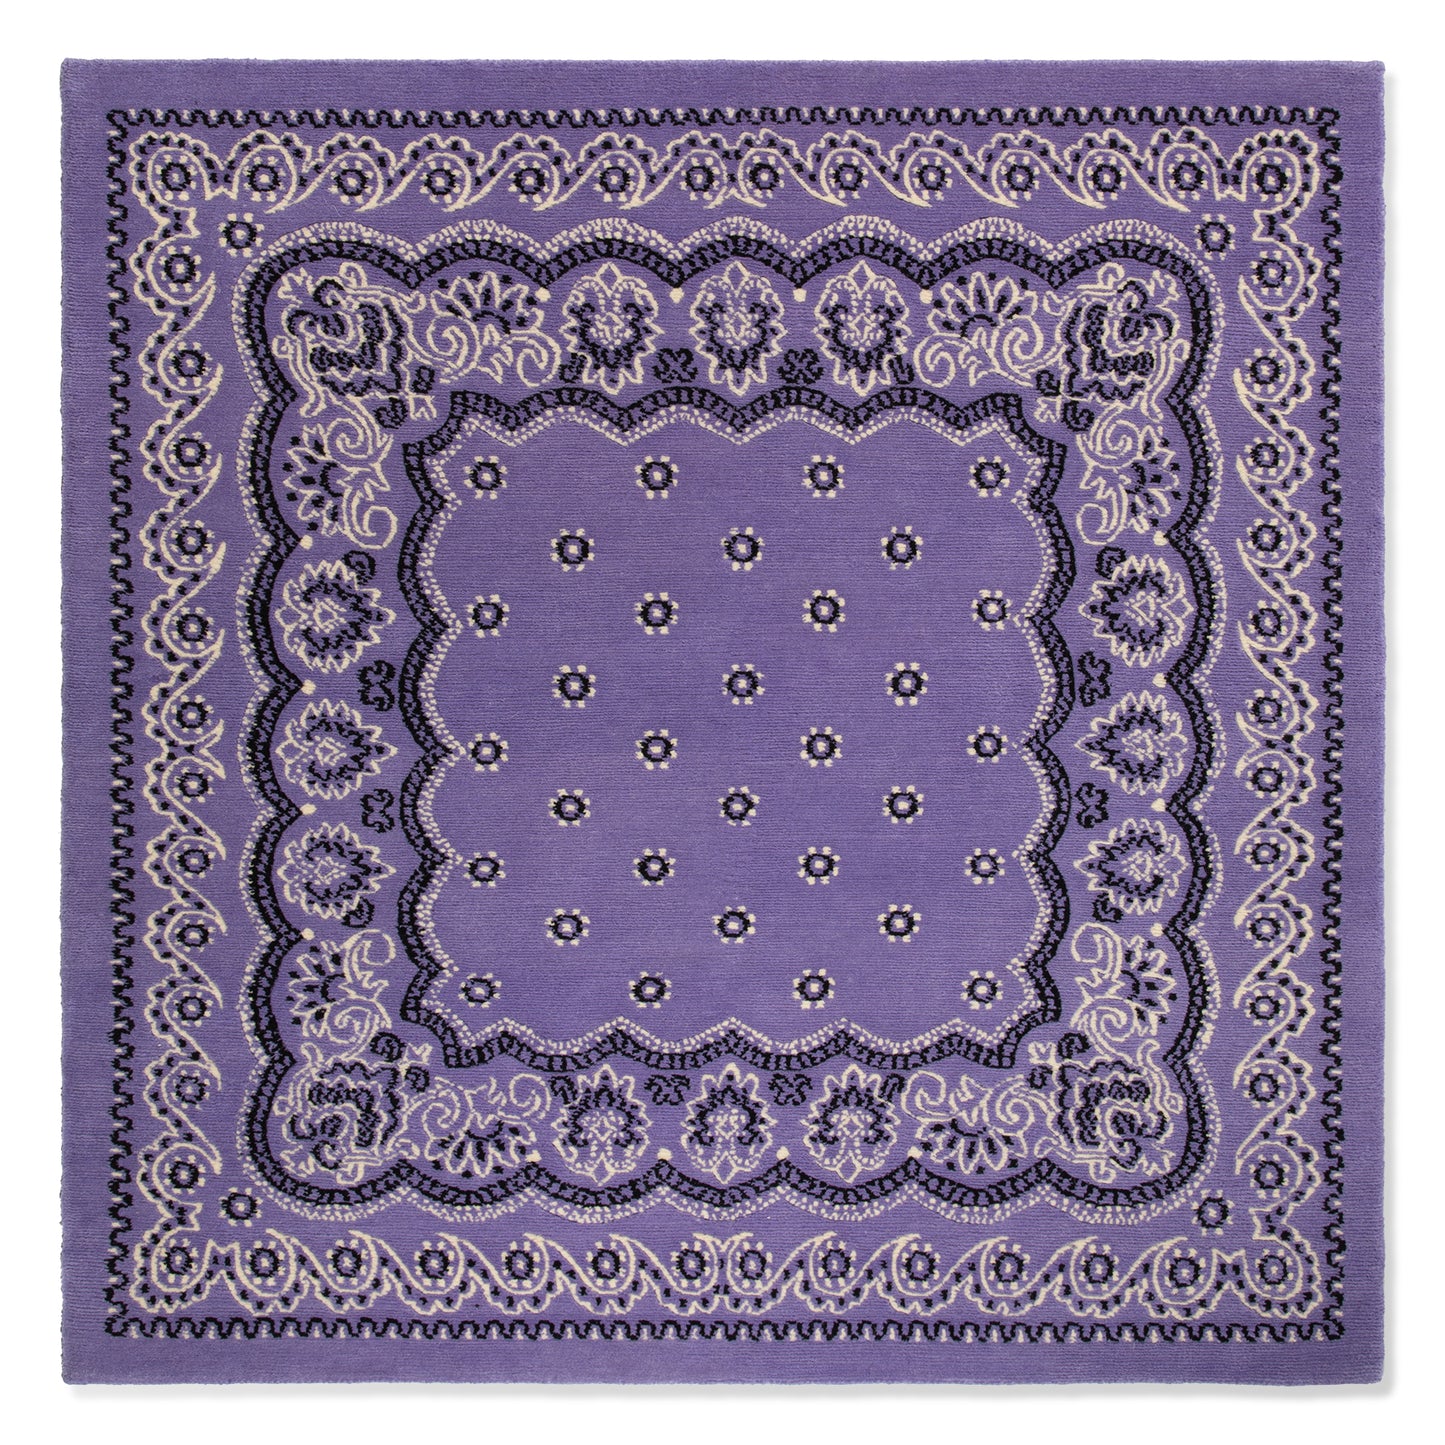 Concepts x Norseen Seabrook Paisley 4x4 Bandana Rug (Purple/Haze)